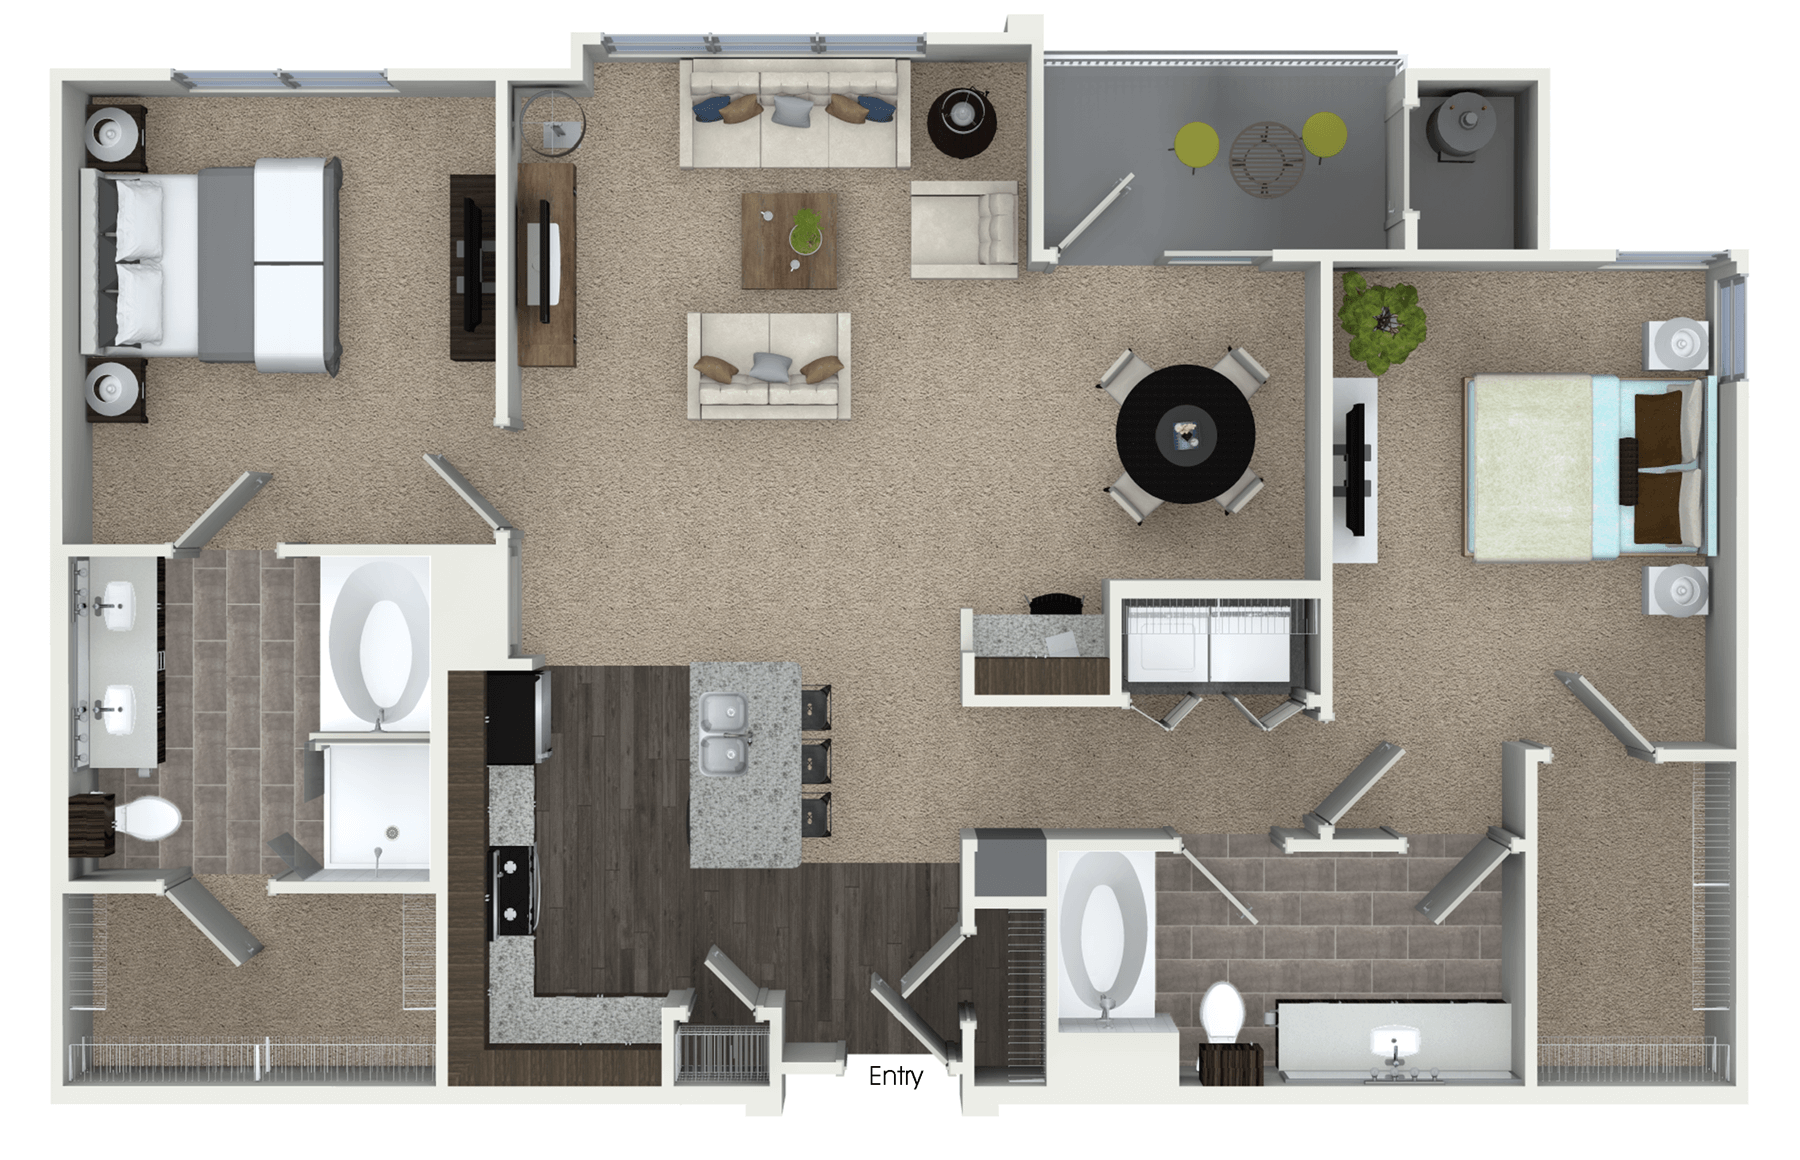 Floorplan for Apartment #2201, 2 bedroom unit at Halstead Marlborough